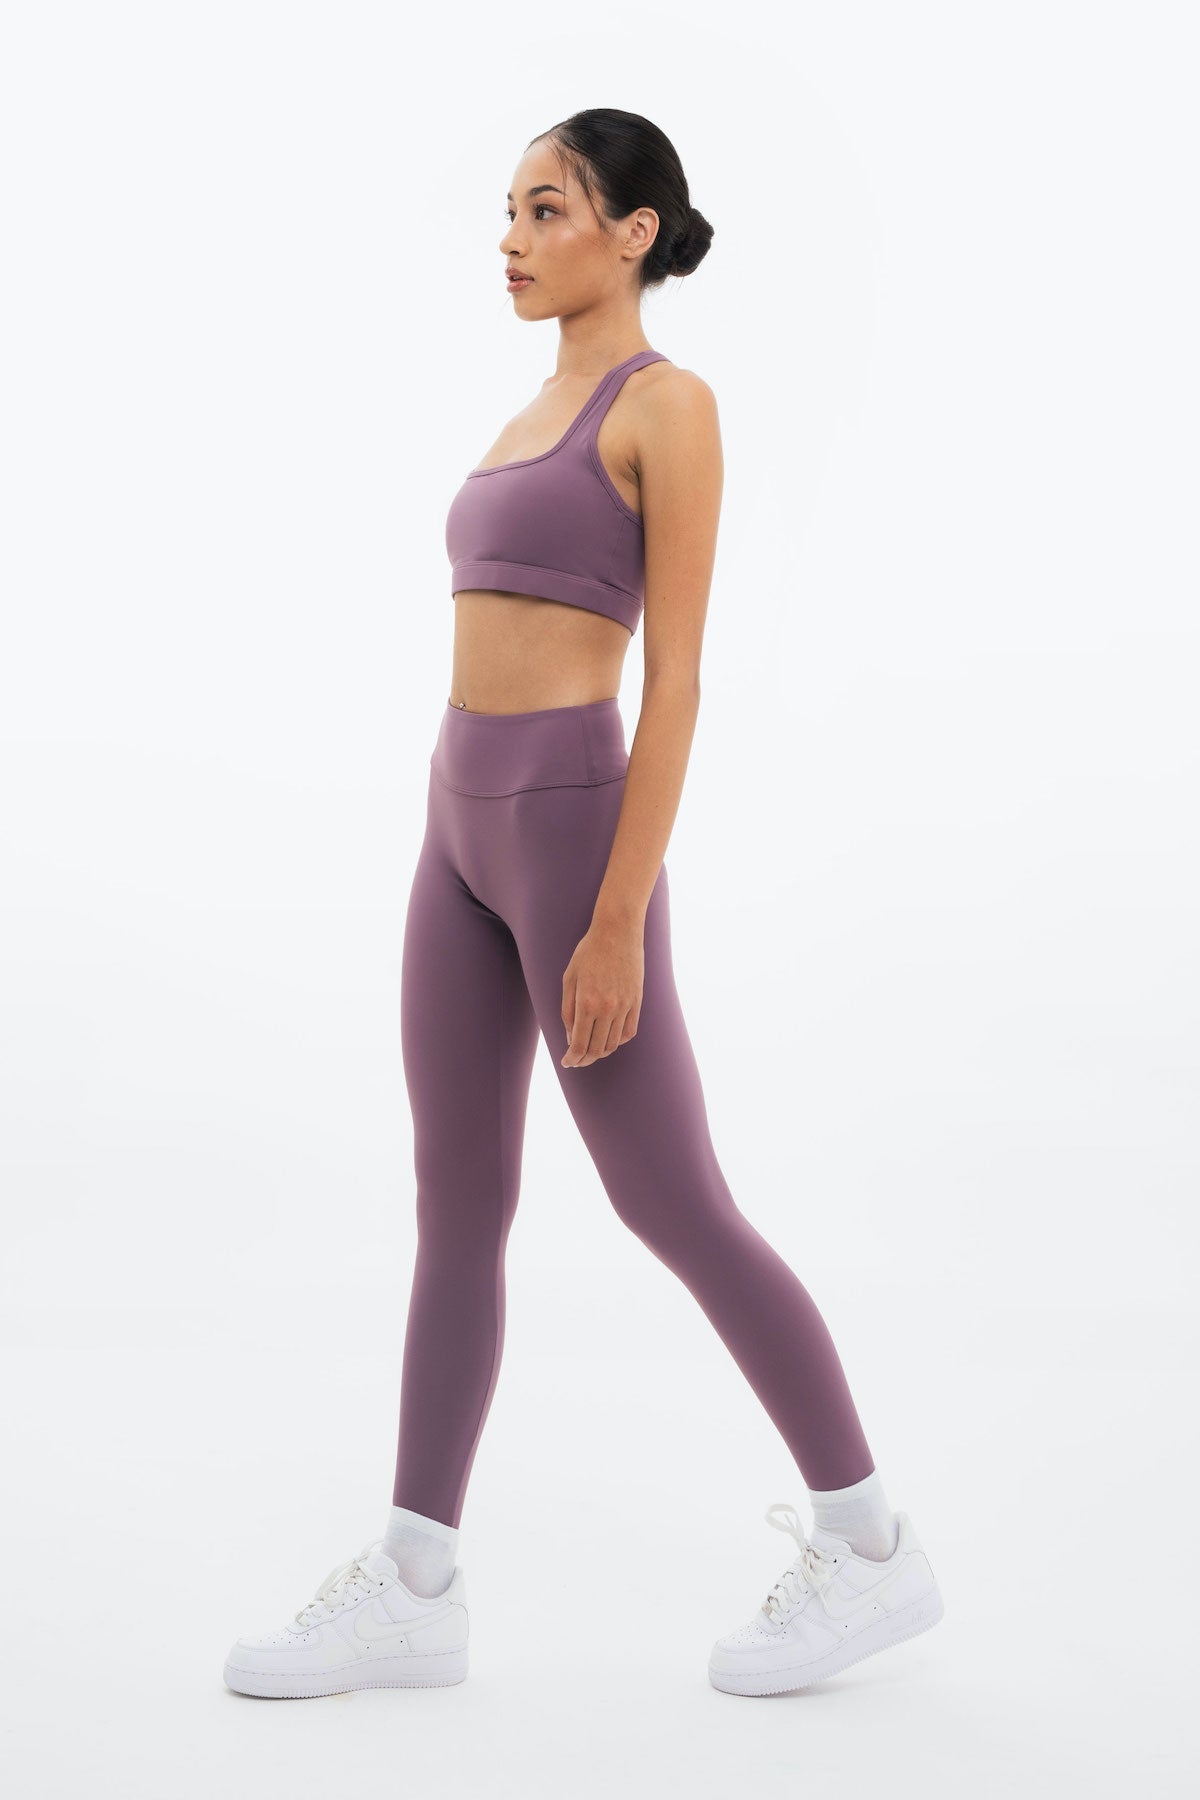 Motion Legging in Purple (XS & S LEFT)